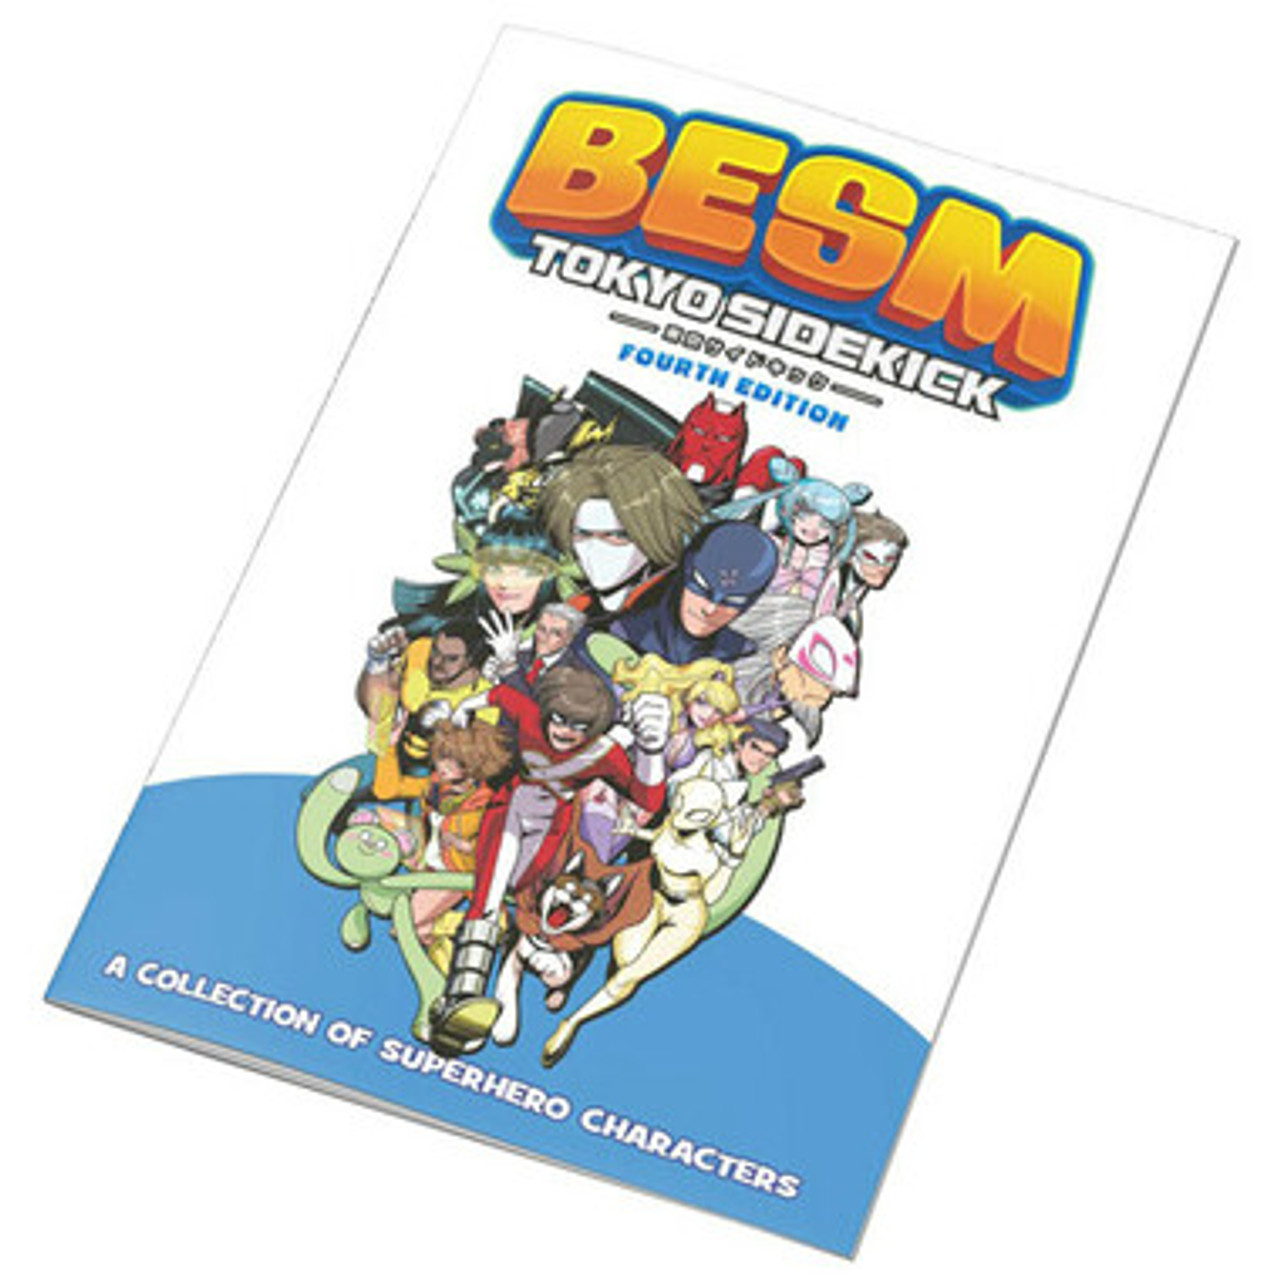 BESM 4] Solo Anime Adventures - Dyskami Publishing Company, Parts Per  Million, Solo Tools, Anime 5E and Tri-Stat Emporium